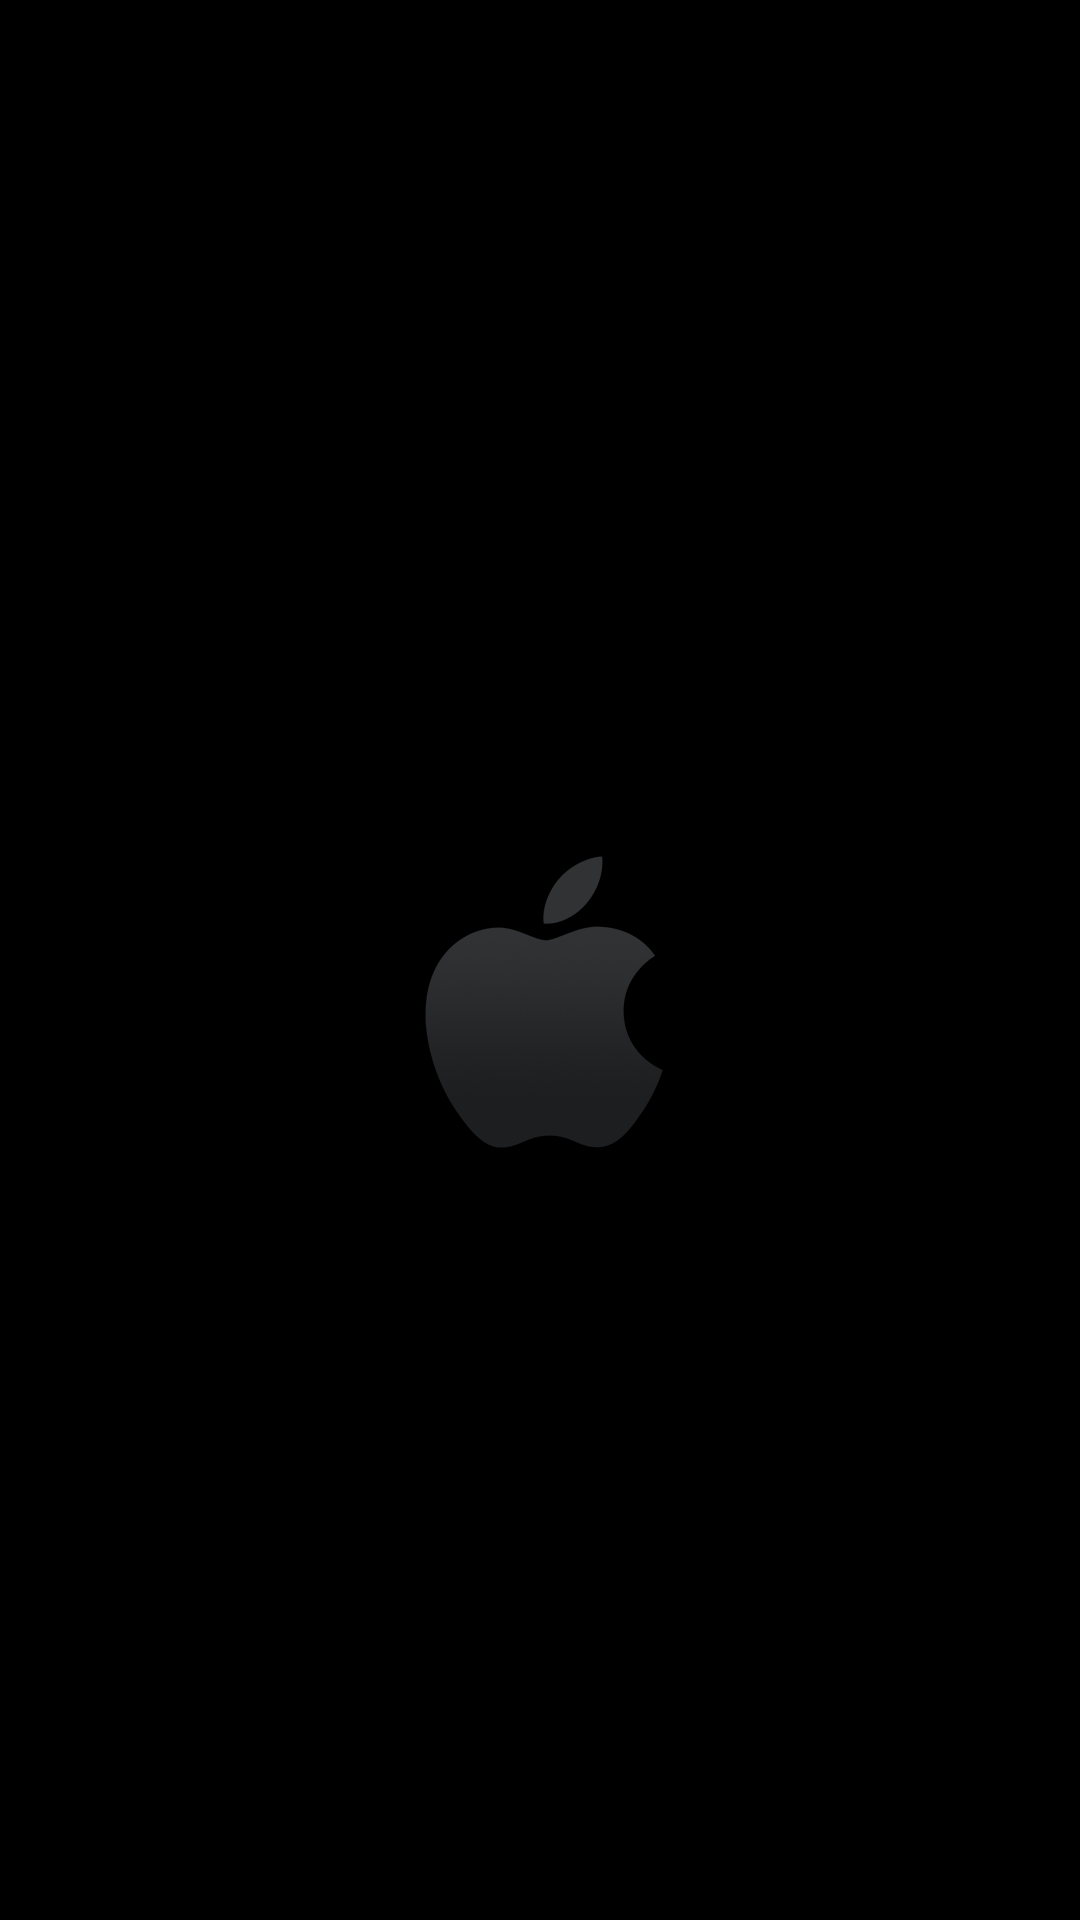 Apple Logo Wallpaper. Apple logo wallpaper iphone, Black wallpaper iphone, Apple wallpaper